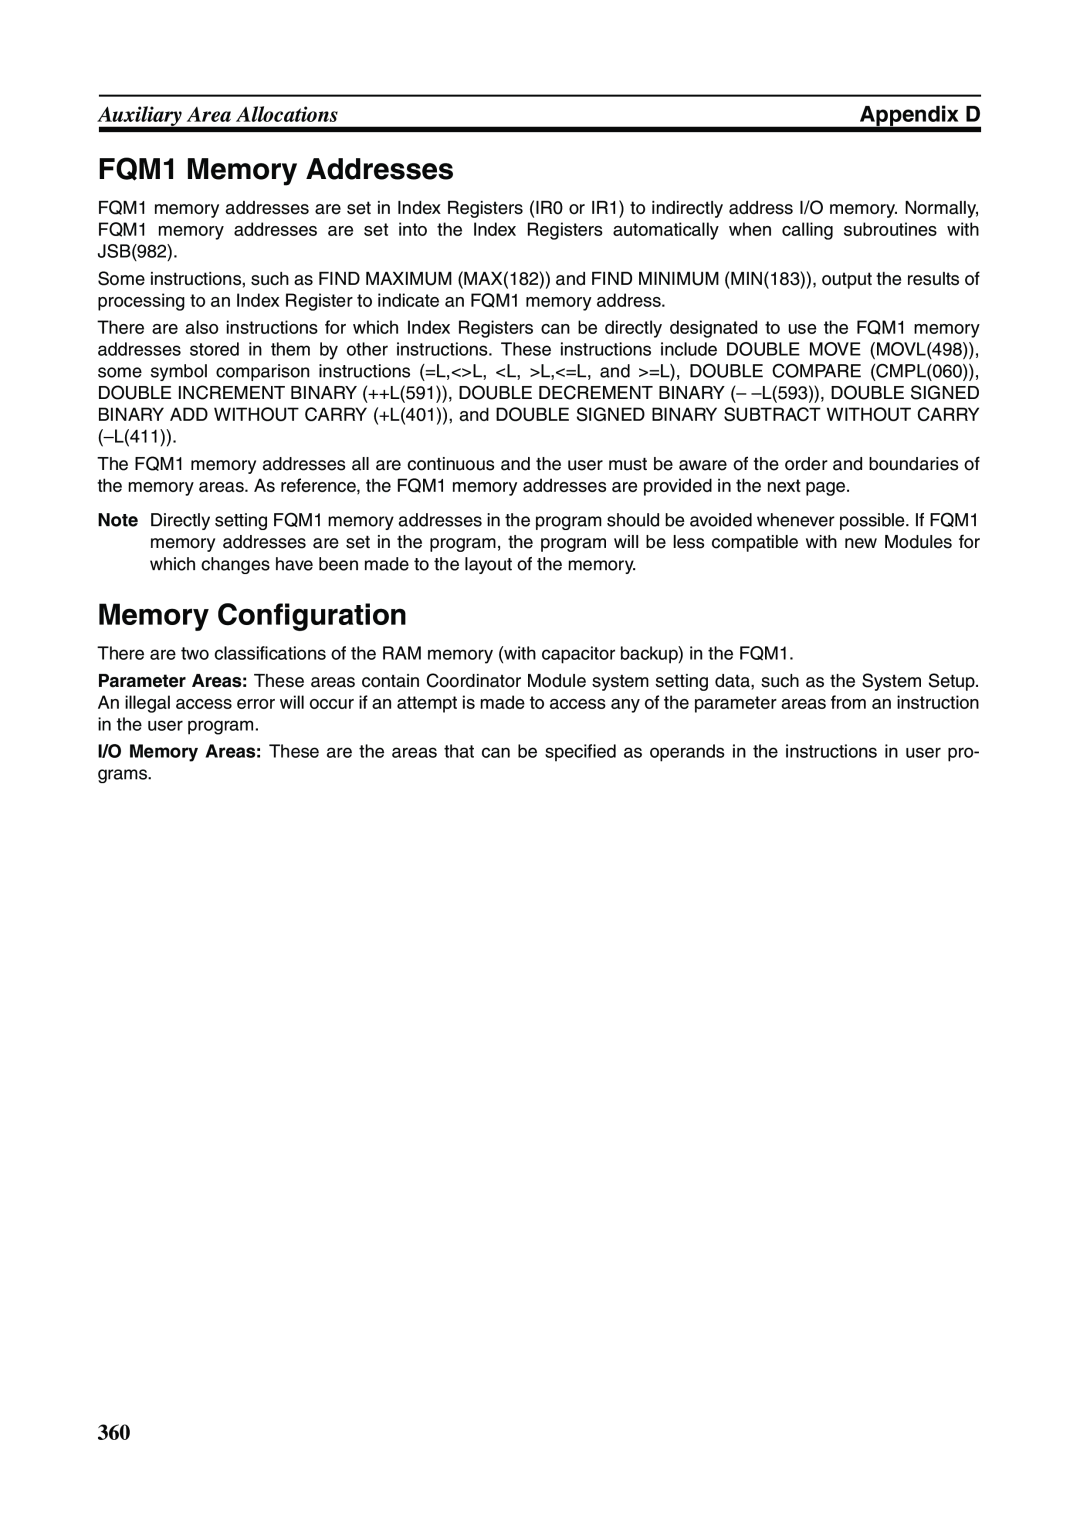 Omron FQM1-MMP21, FQM1-CM001 FQM1 Memory Addresses, Memory Configuration, Auxiliary Area Allocations, Appendix D 